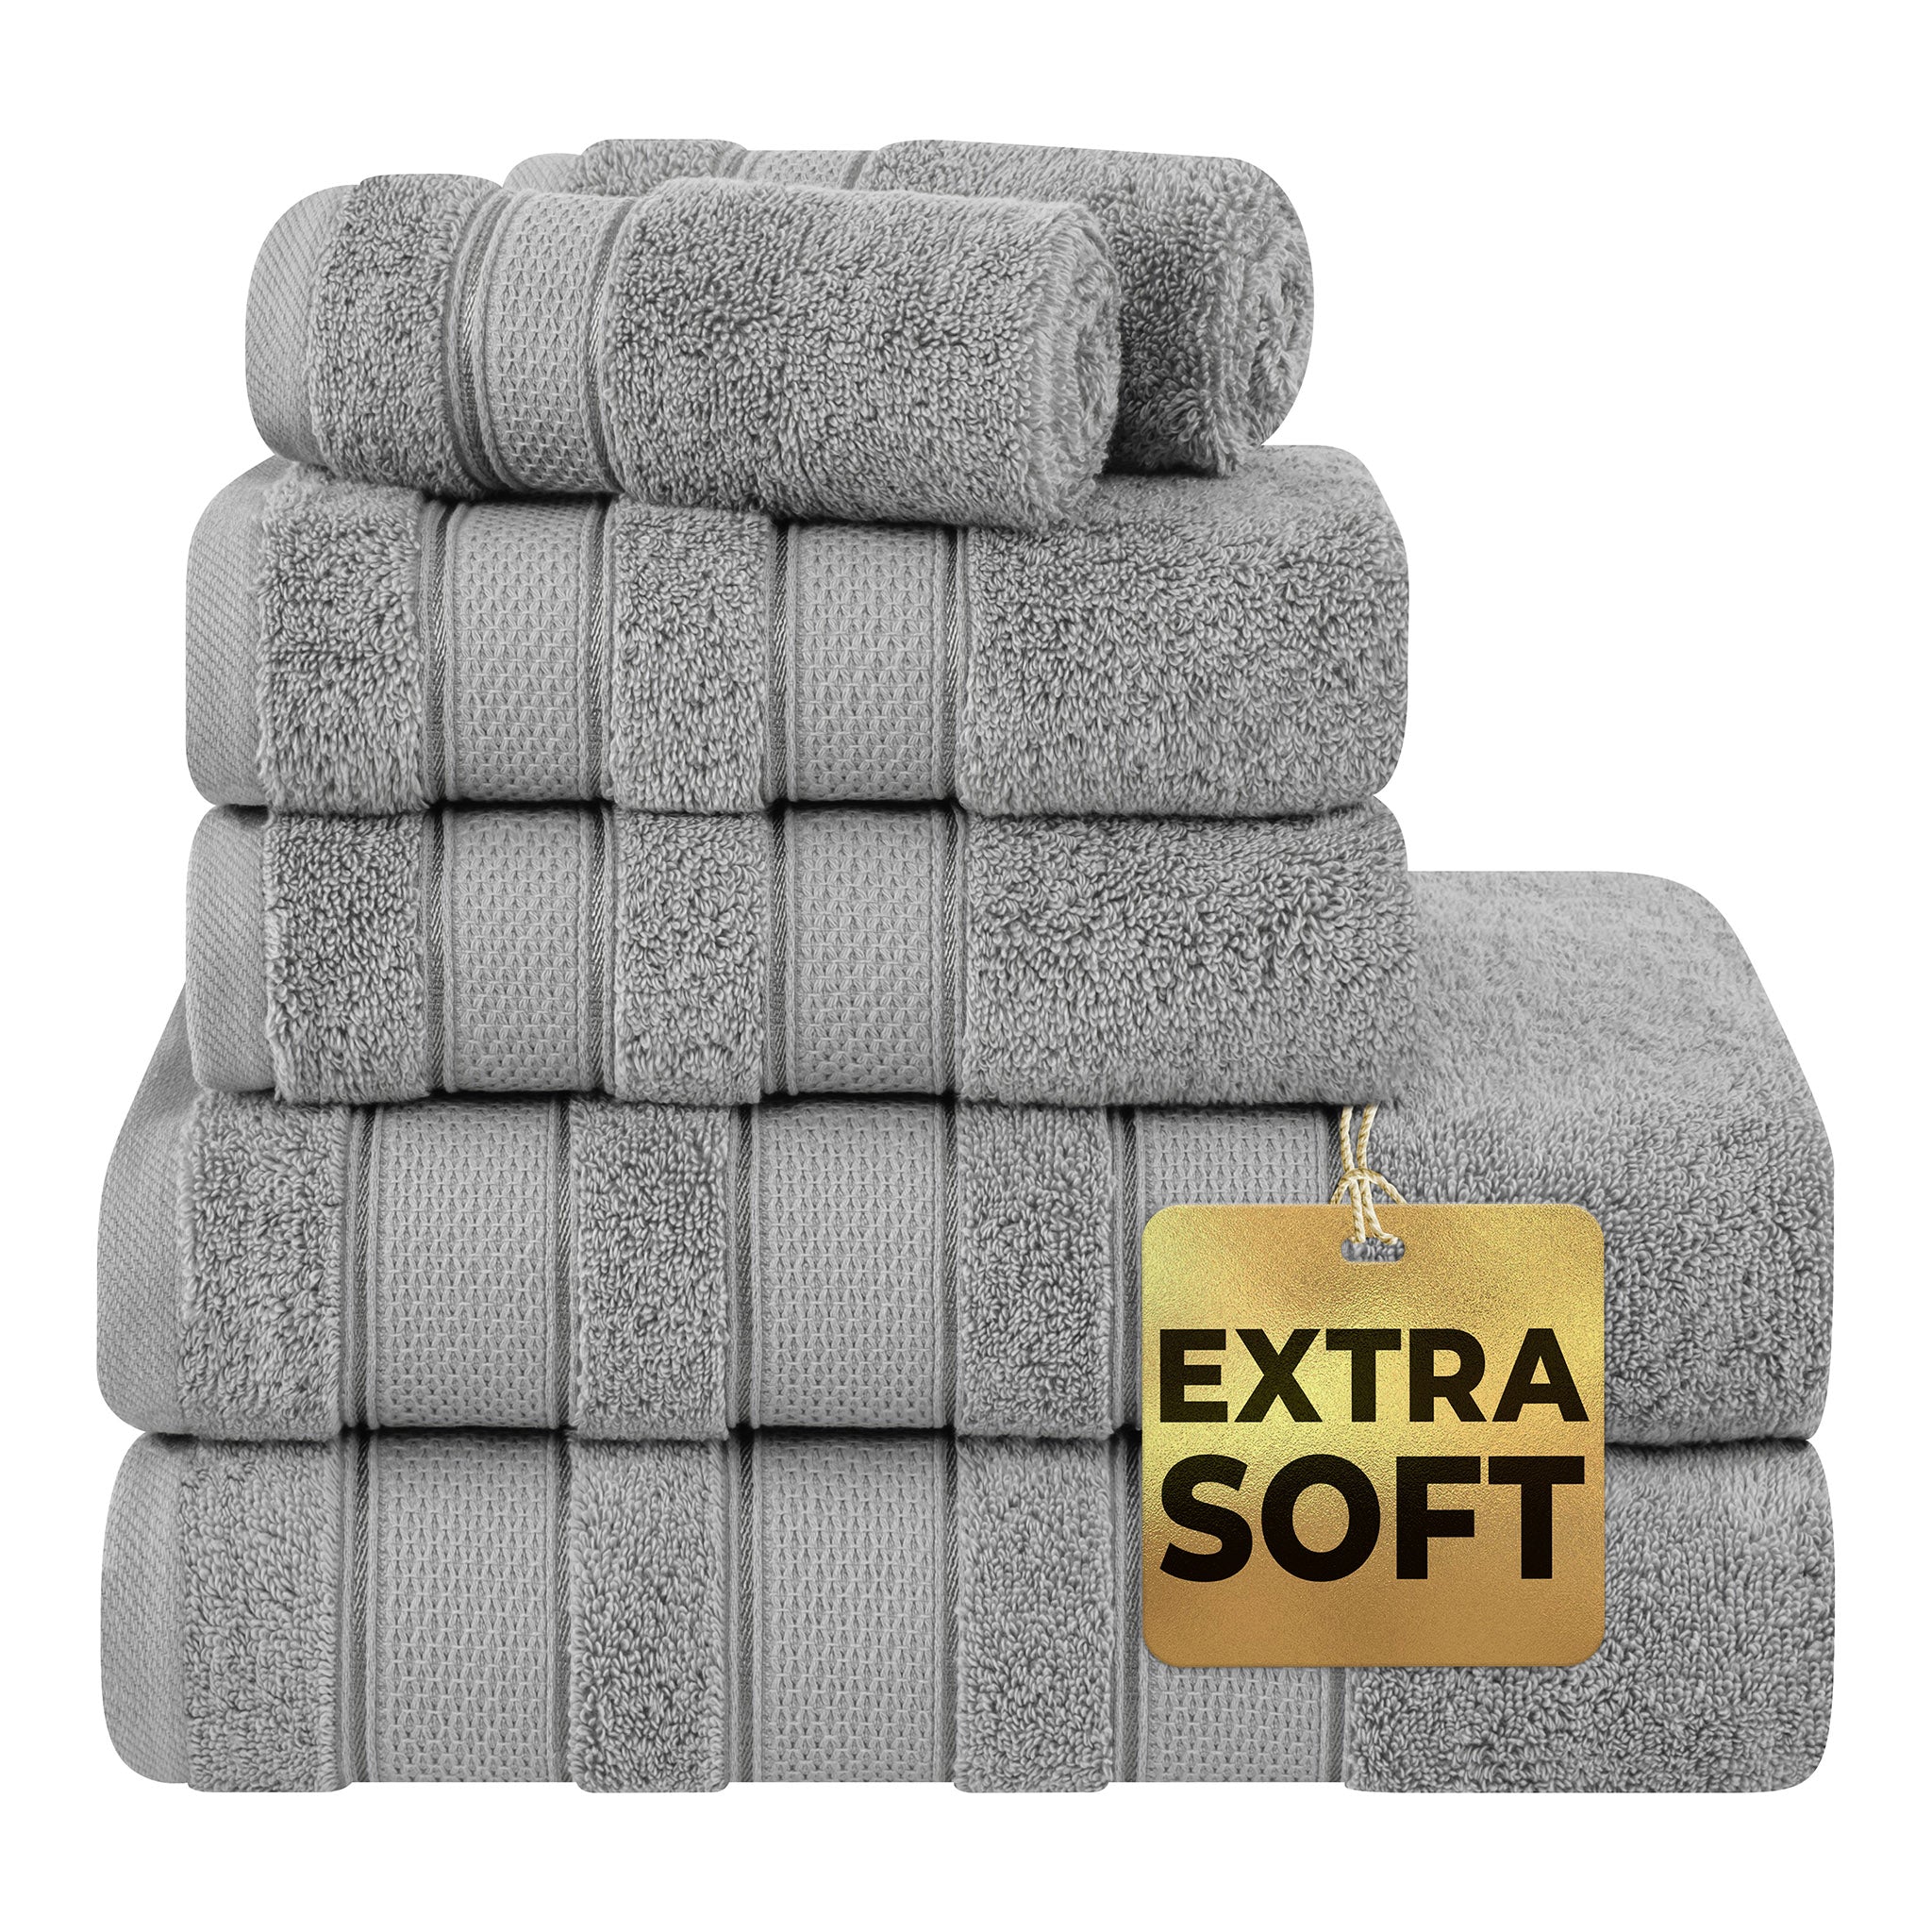 American Soft Linen Salem 6 Piece Bath Towel Set, 100% Turkish Combed Cotton, Dark Gray